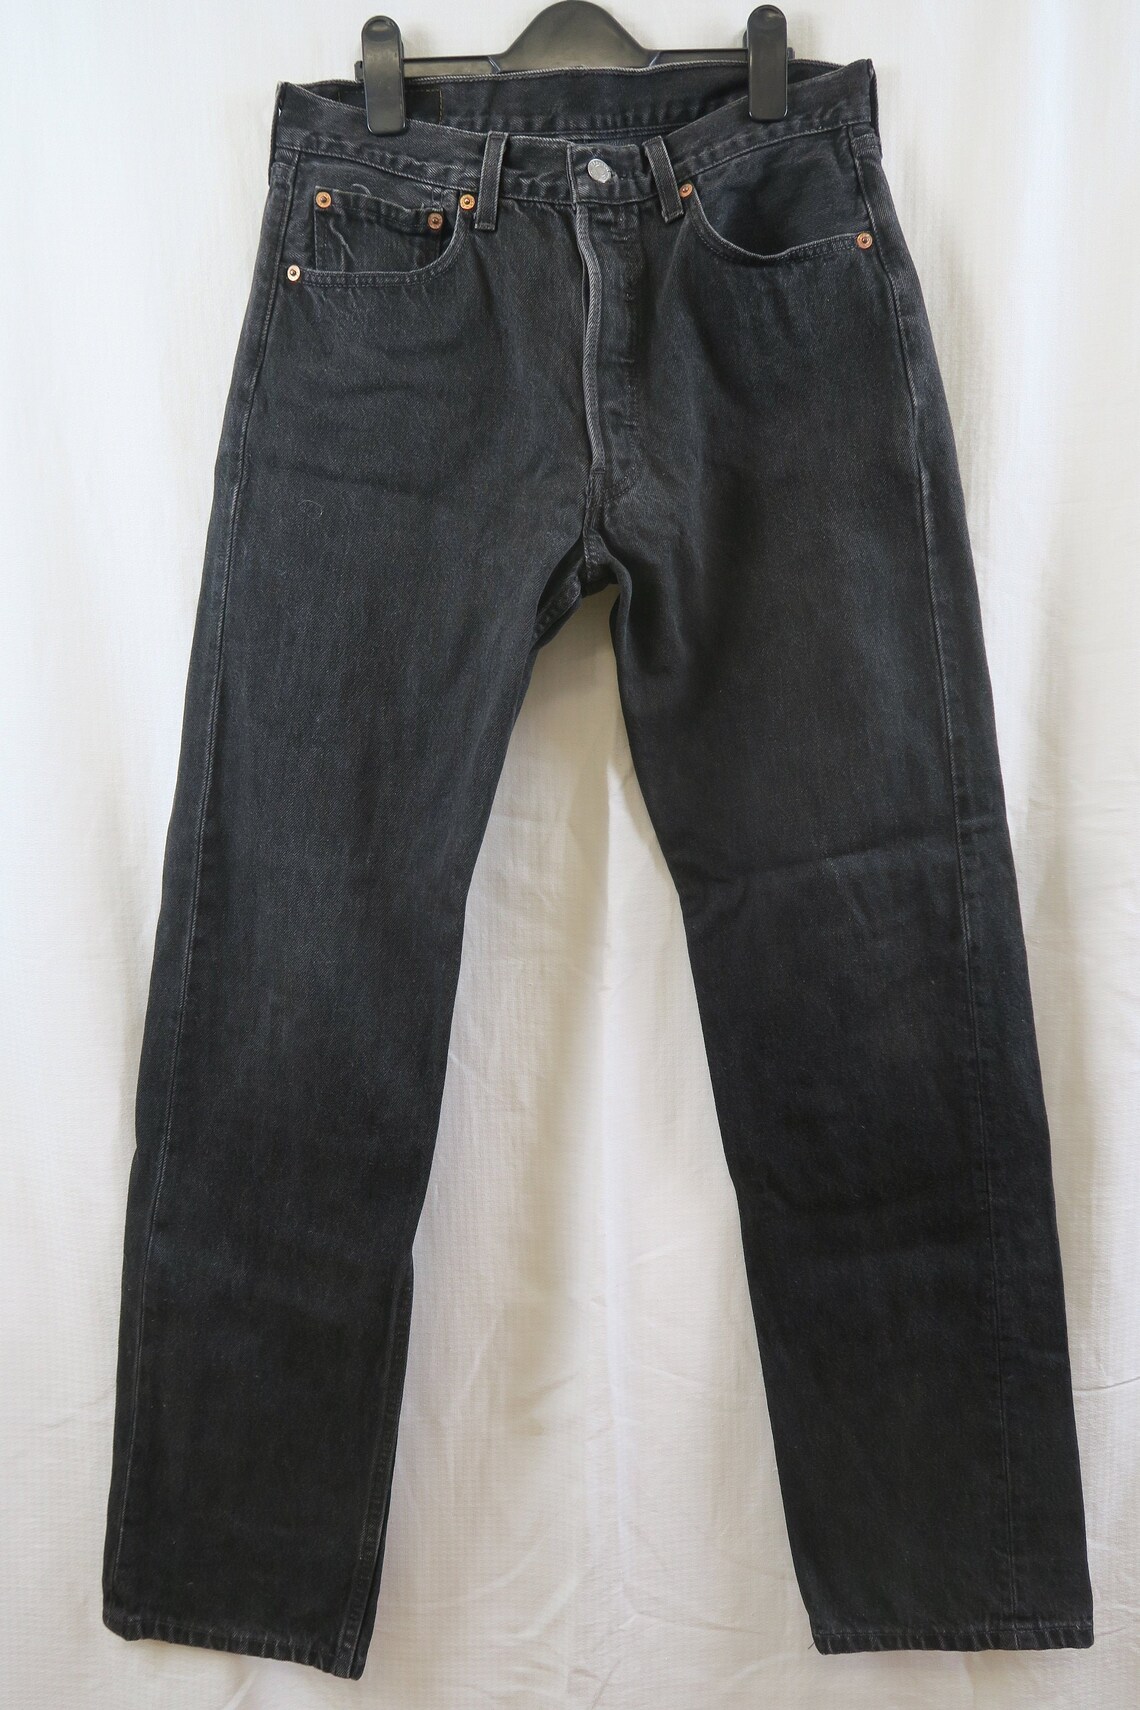 Levis 501 Washed Black Jeans W32 L32 | Etsy